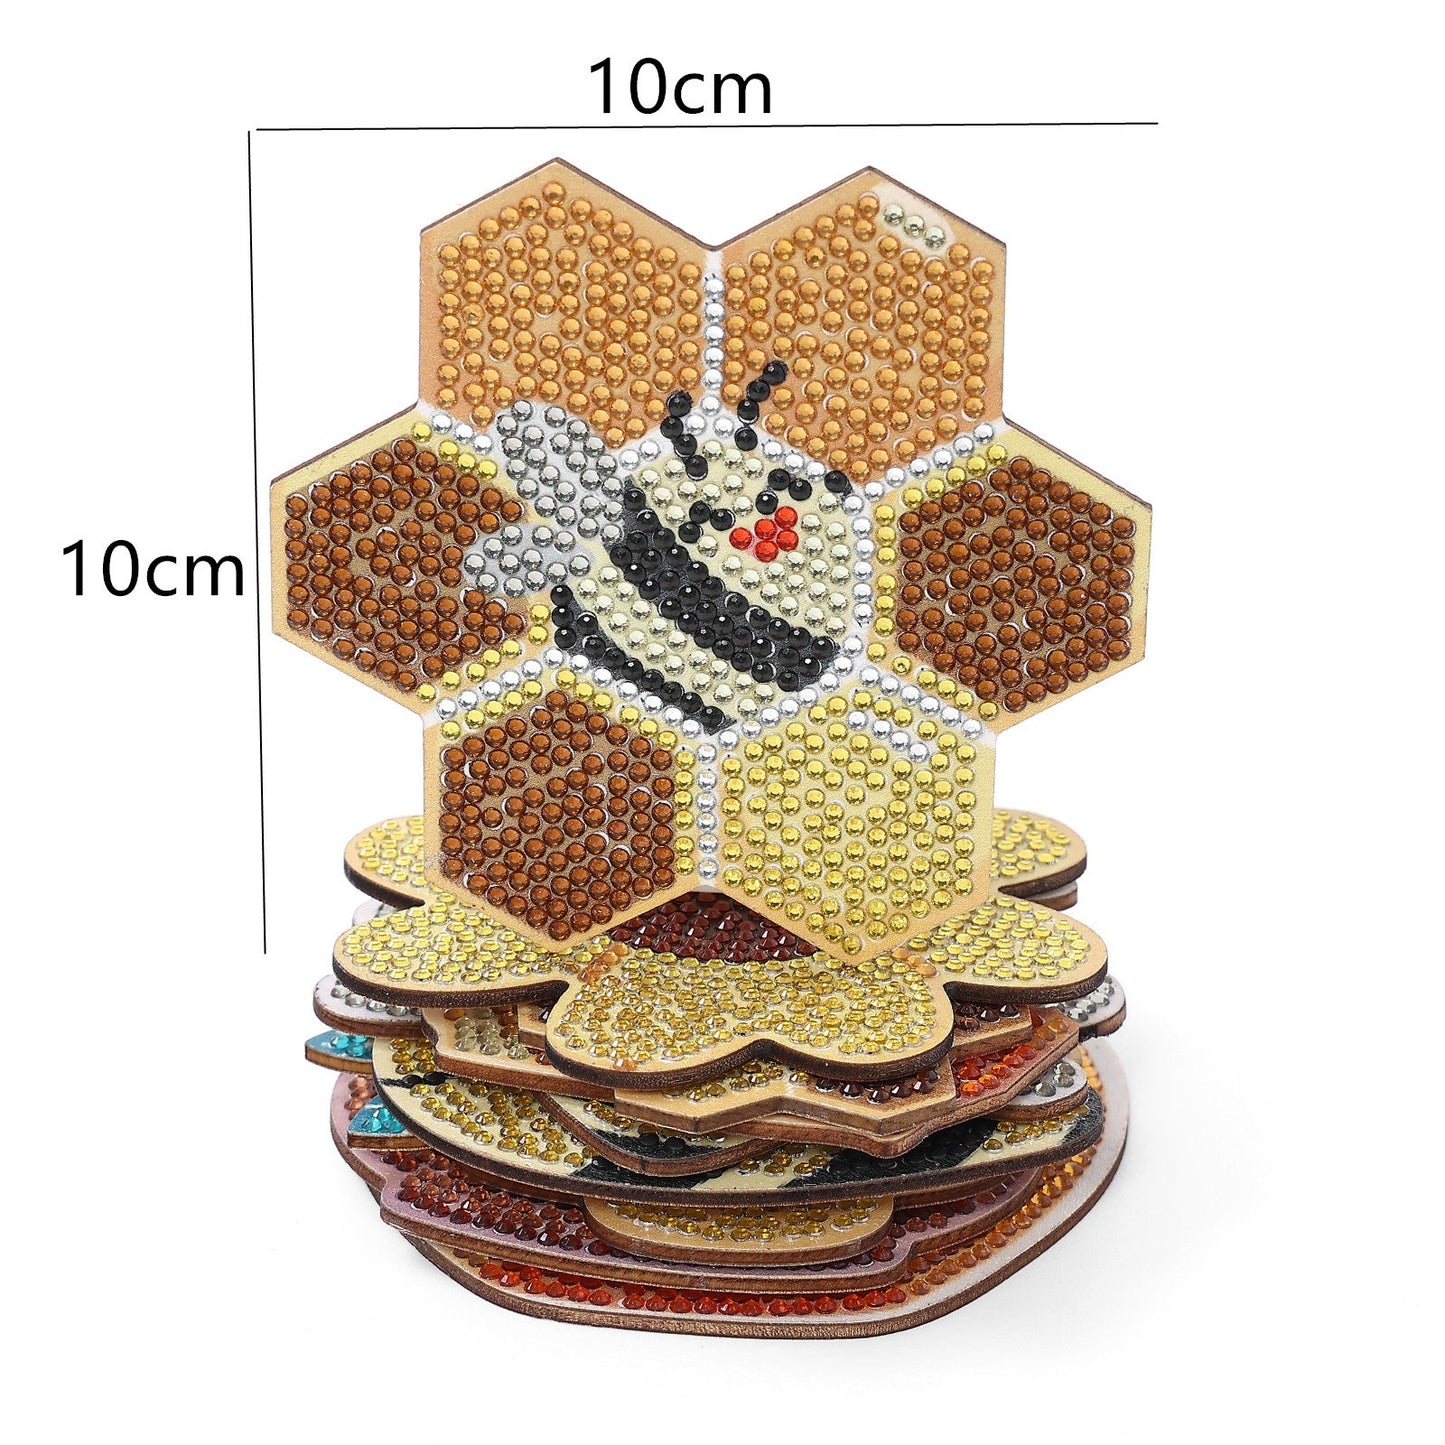 DIY Honeybee Diamond Painting Coasters